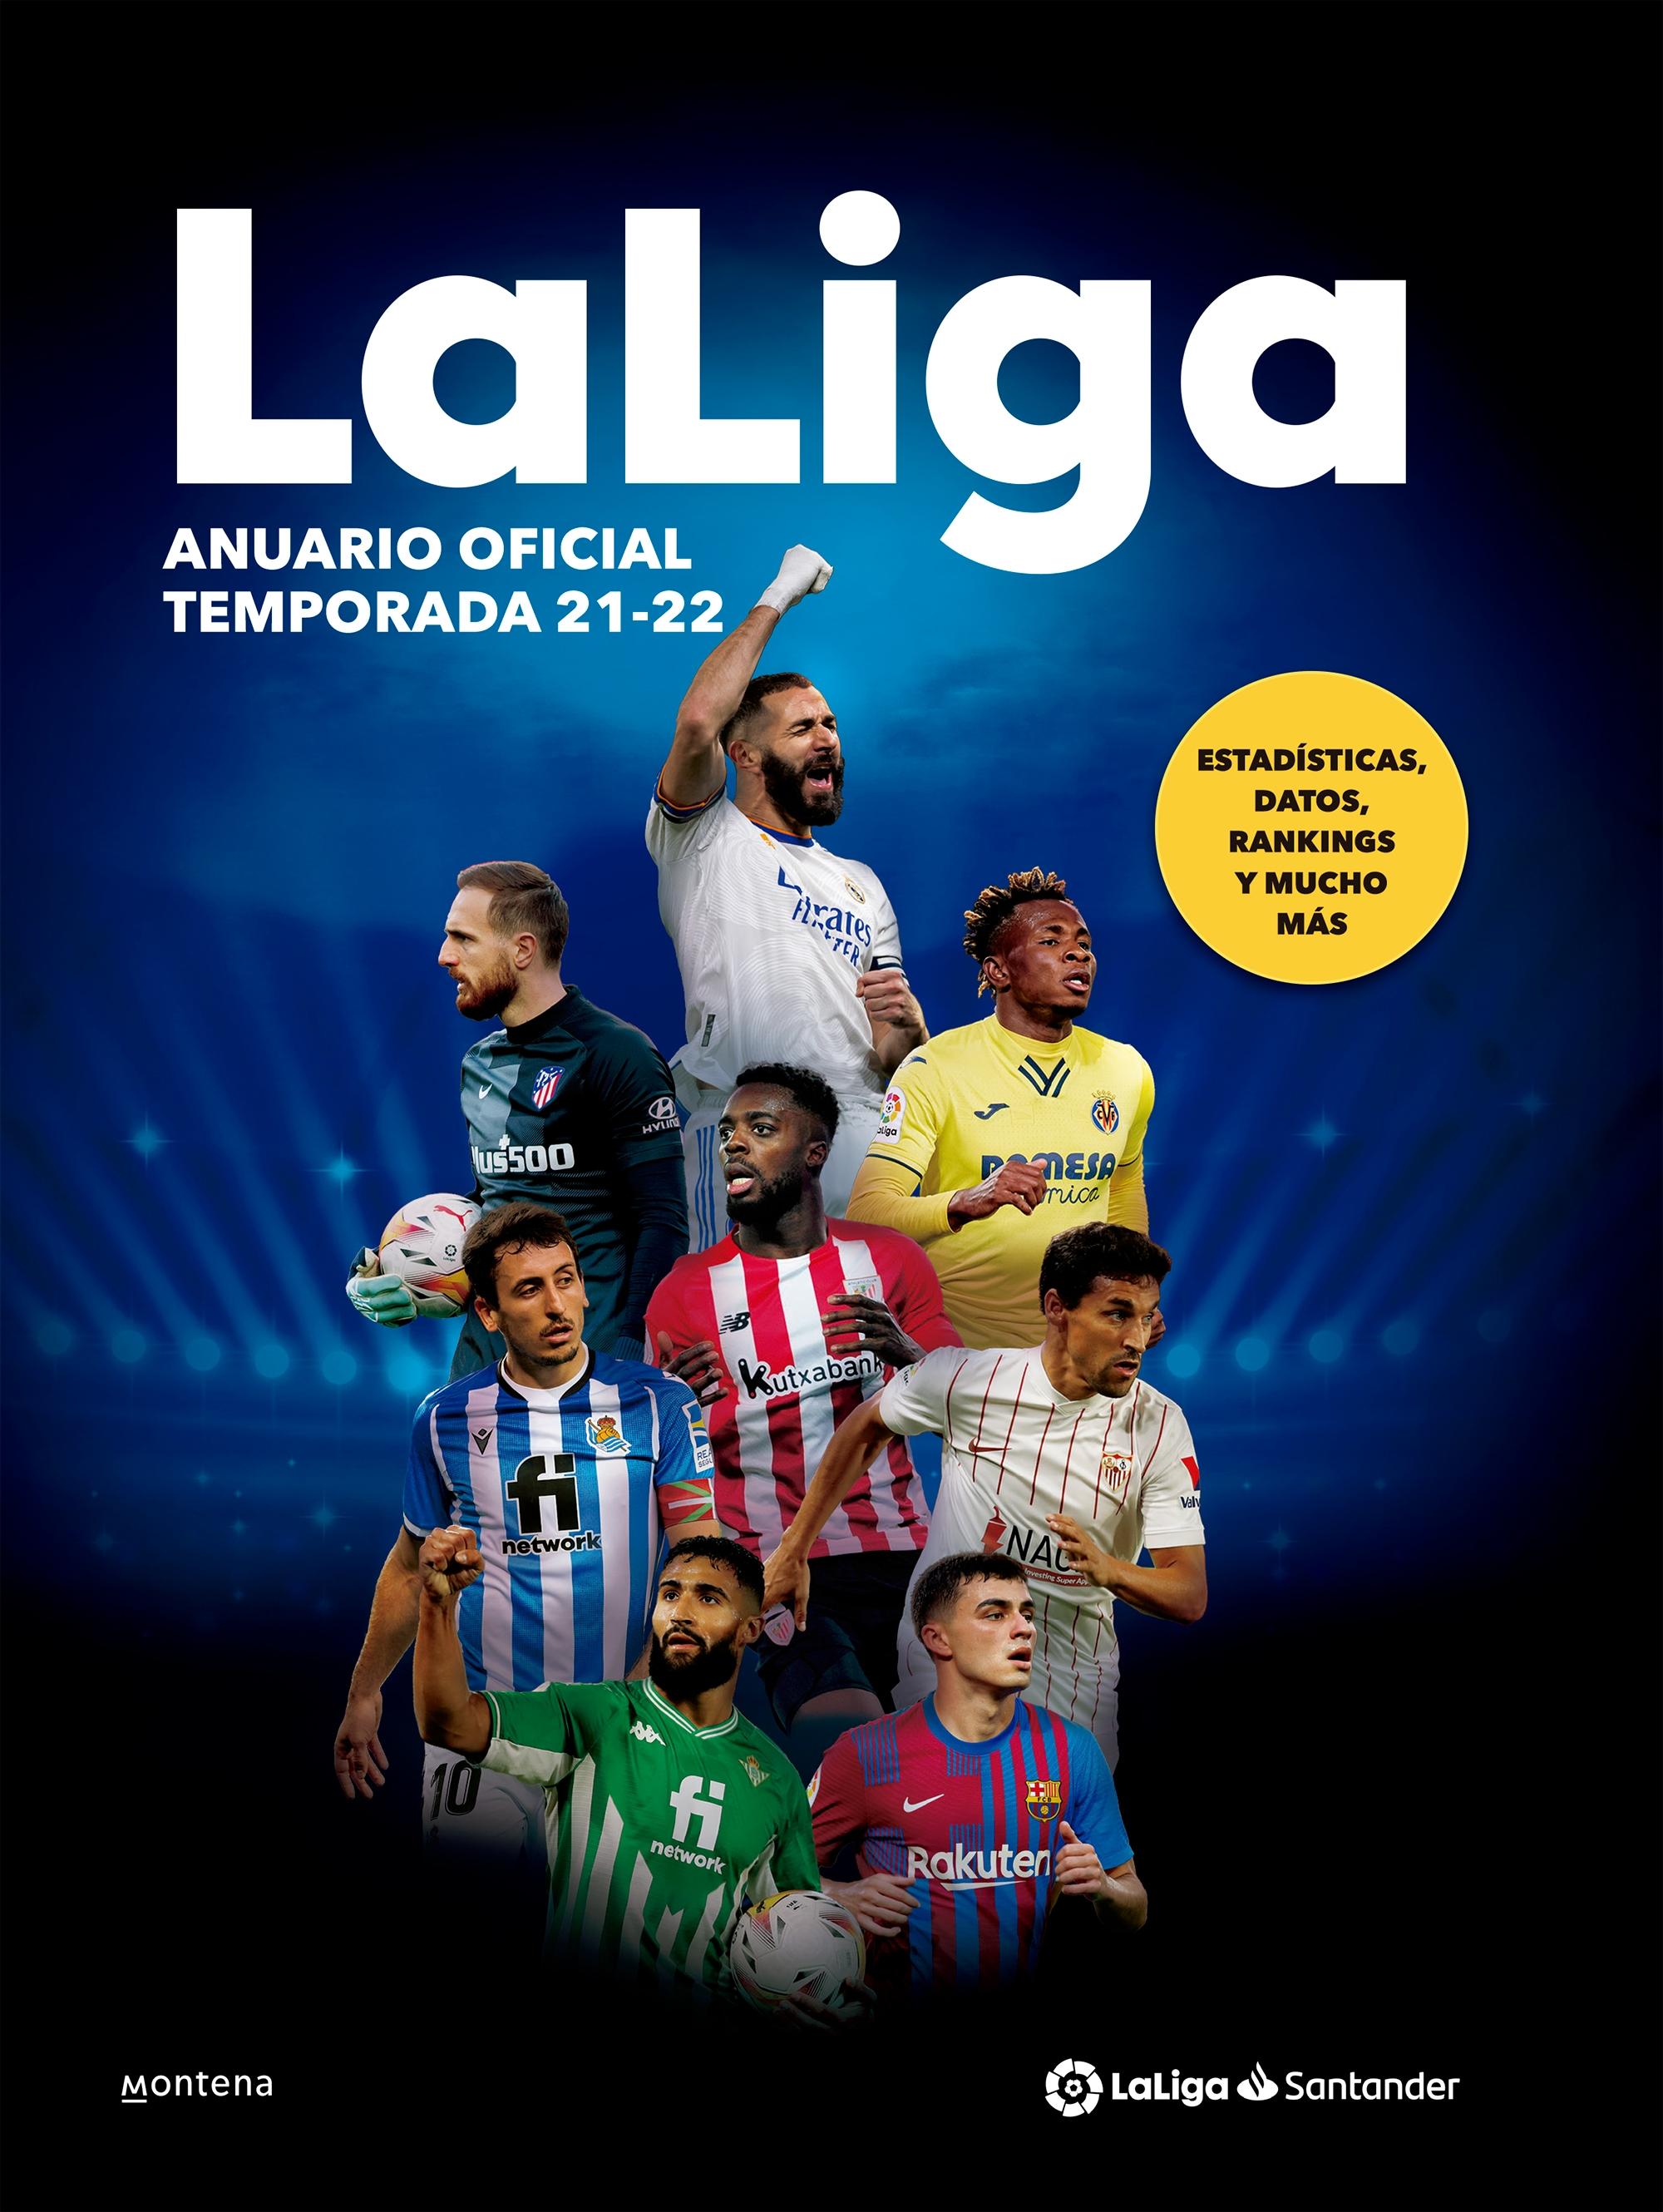 La Liga: anuario oficial temporada 21-22. 